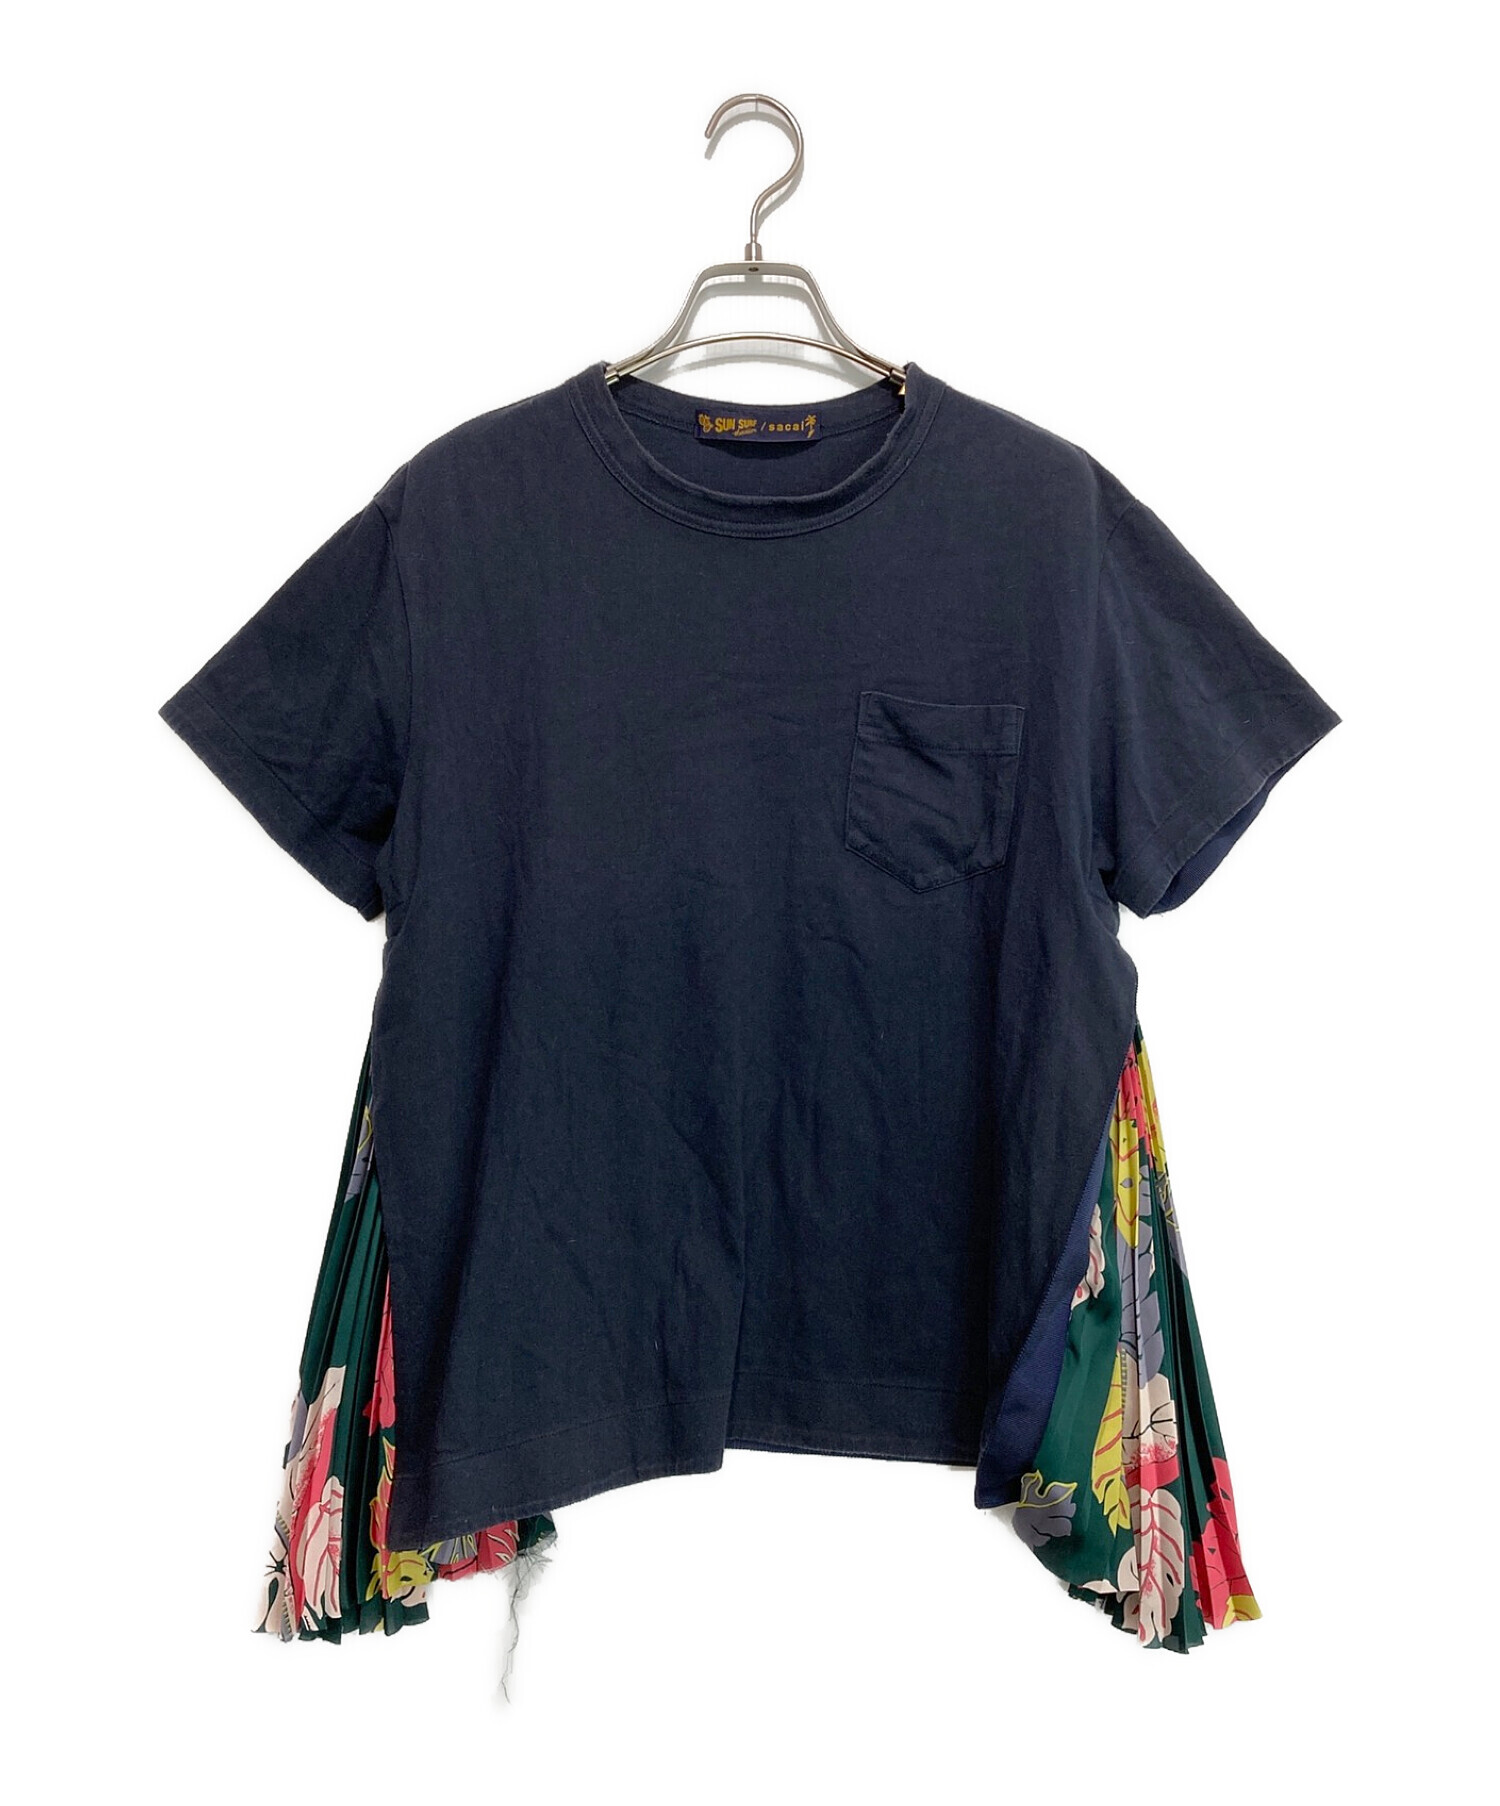 Sacaiとsun surfのコラボシャツ サイズ3 - シャツ